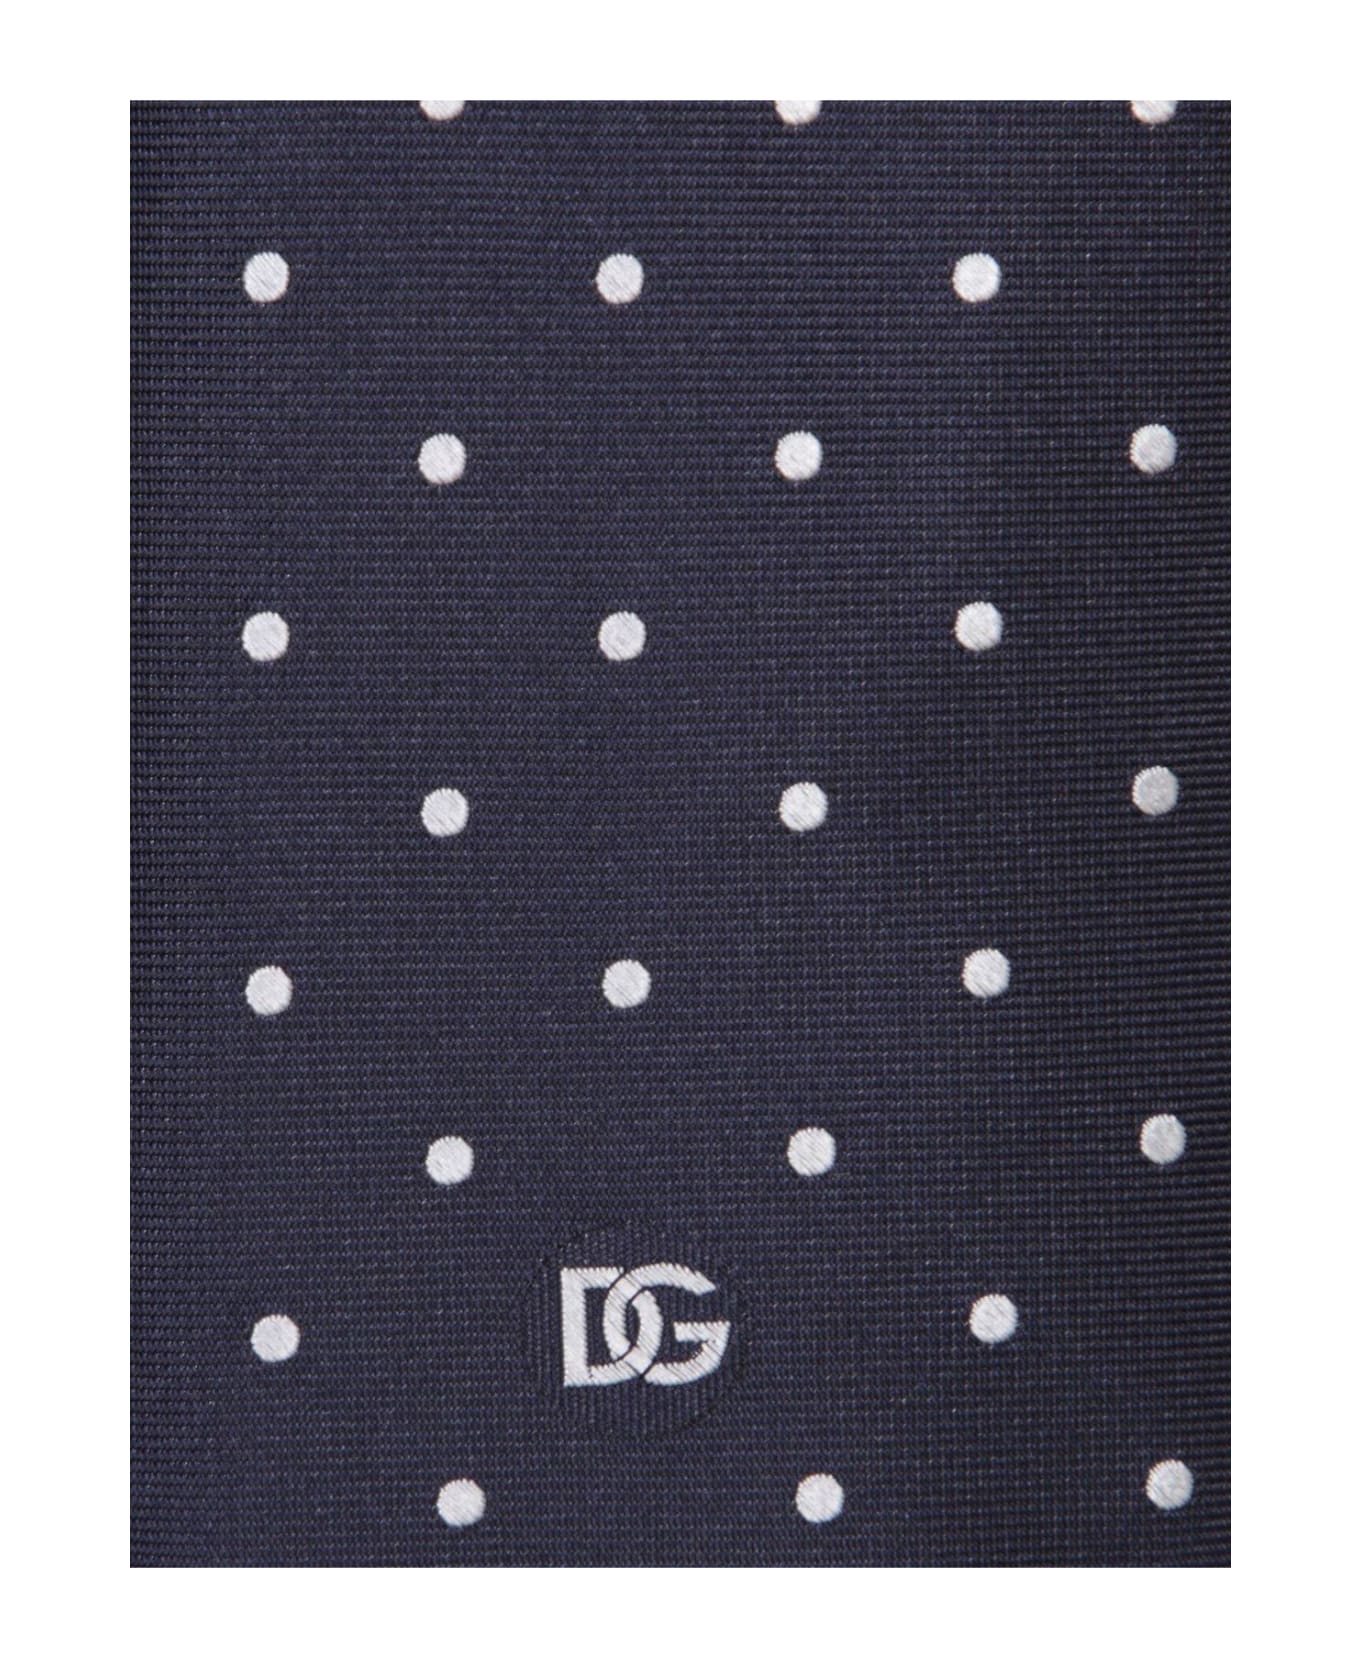 Dolce & Gabbana Logo Printed Tie - Blue